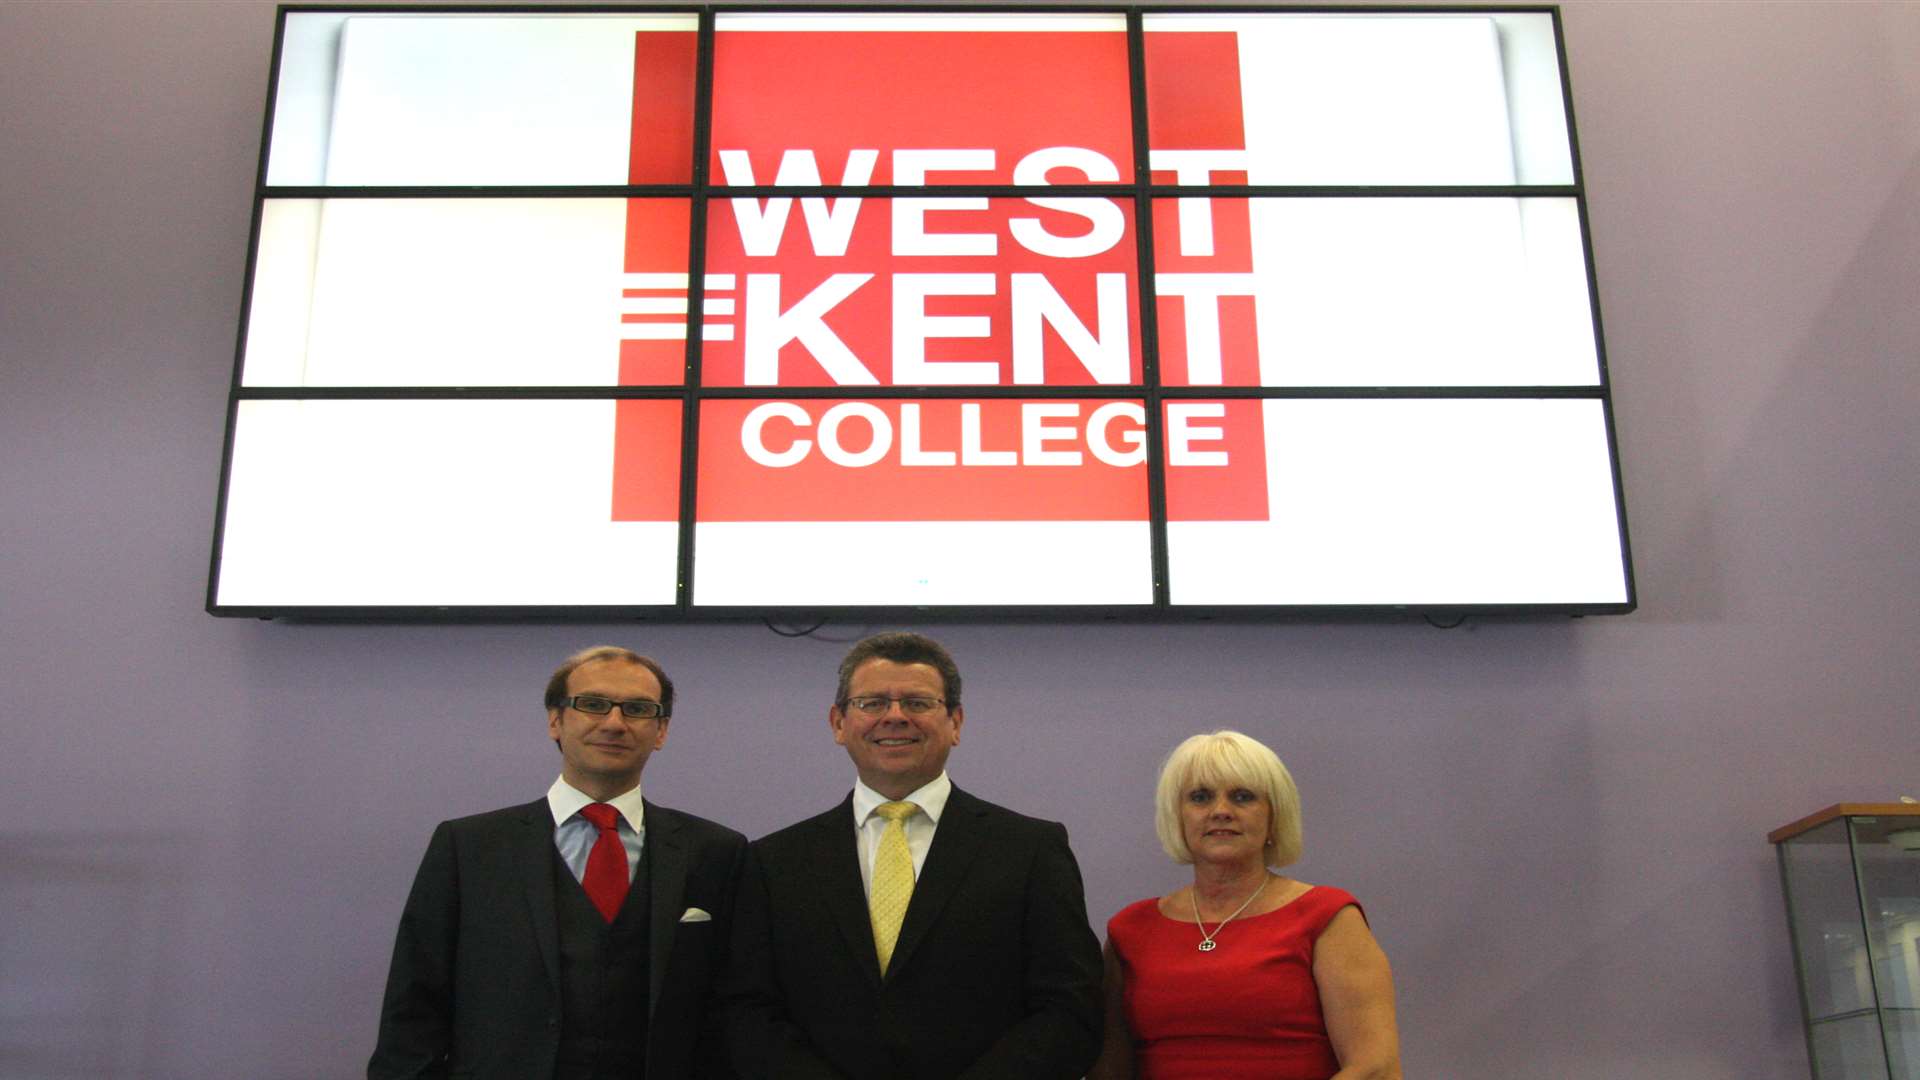 Hadlow College finance director Mark Lumsdon-Taylor, left, principal Paul Hannan and vice principal Lynda Brown with the new West Kent College branding